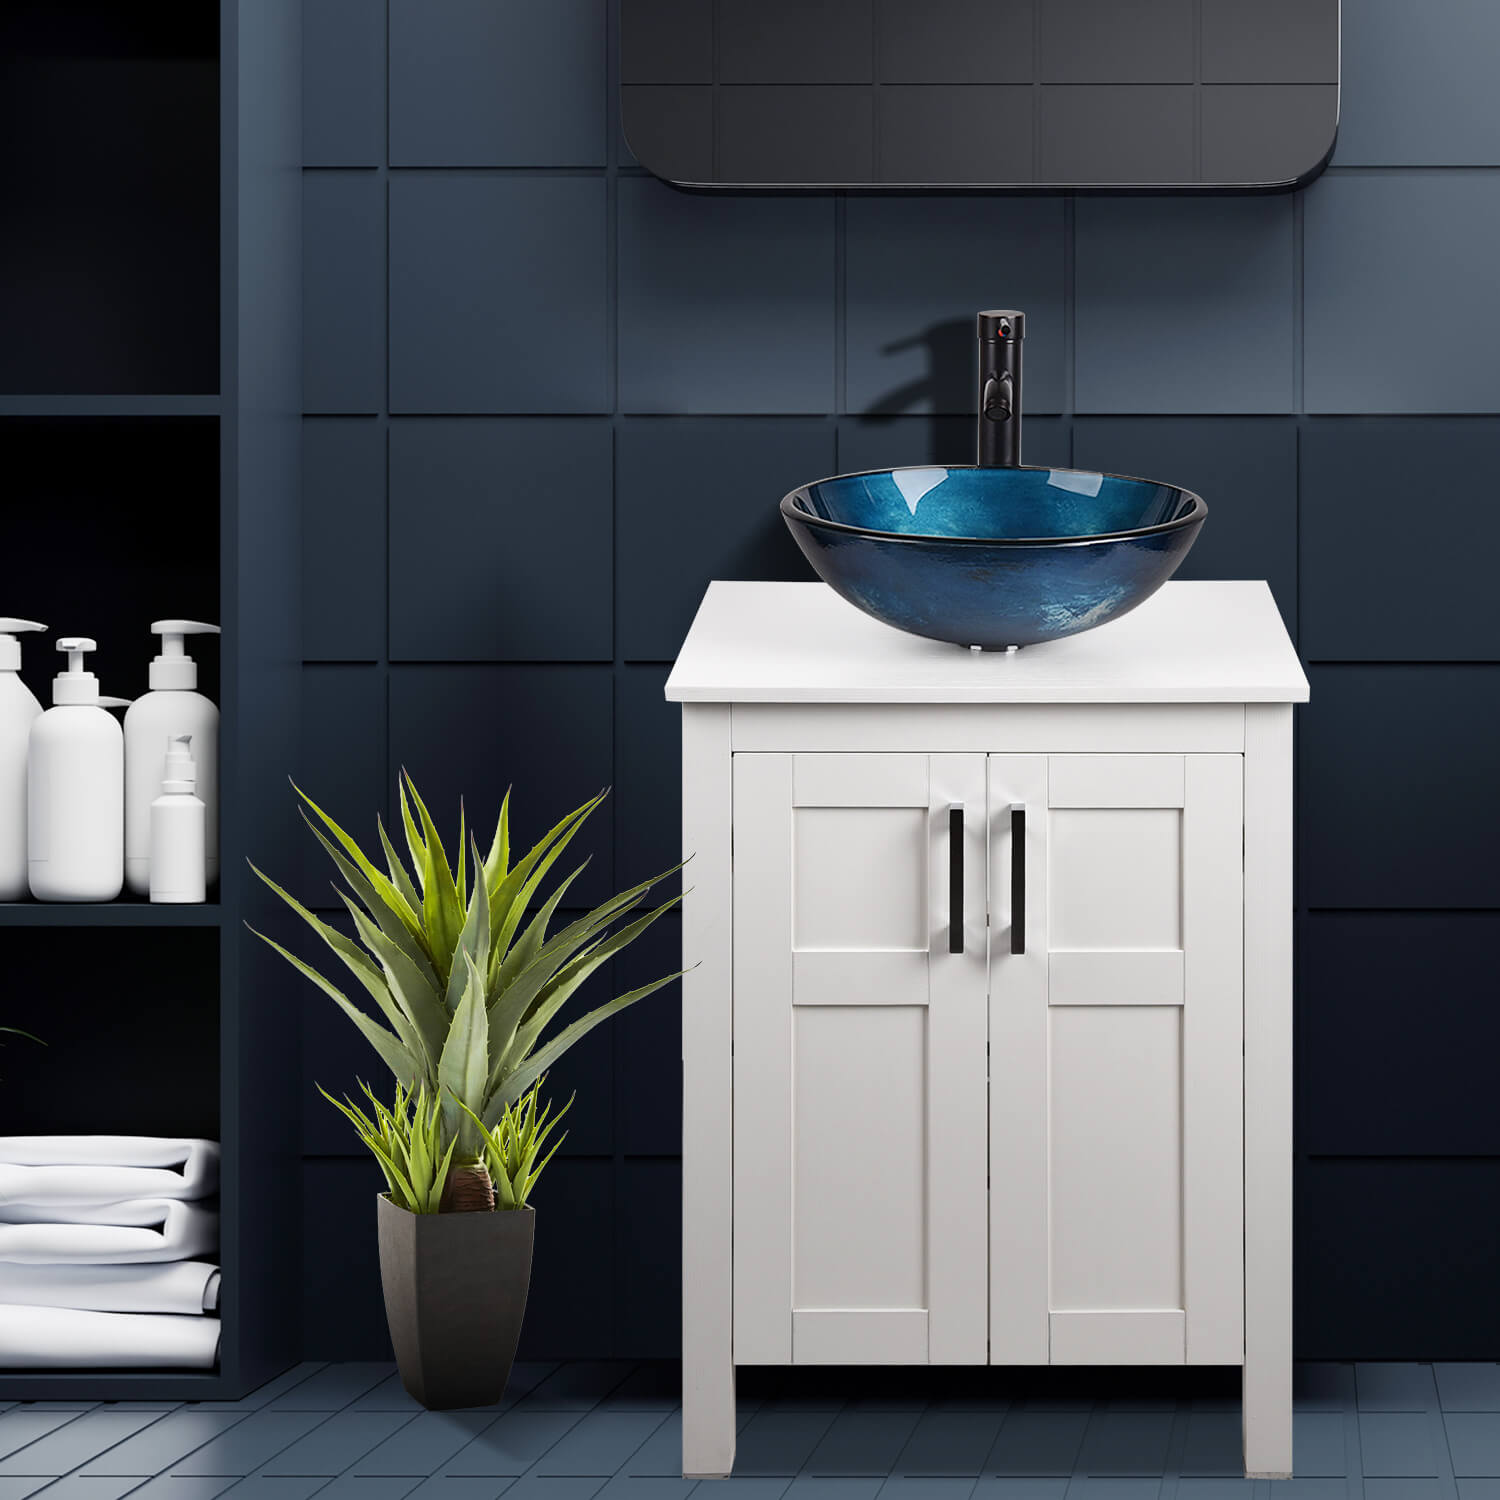 Elecwish White Bathroom Vanity and Blue Glass Sink Set HW1120-WH display scene